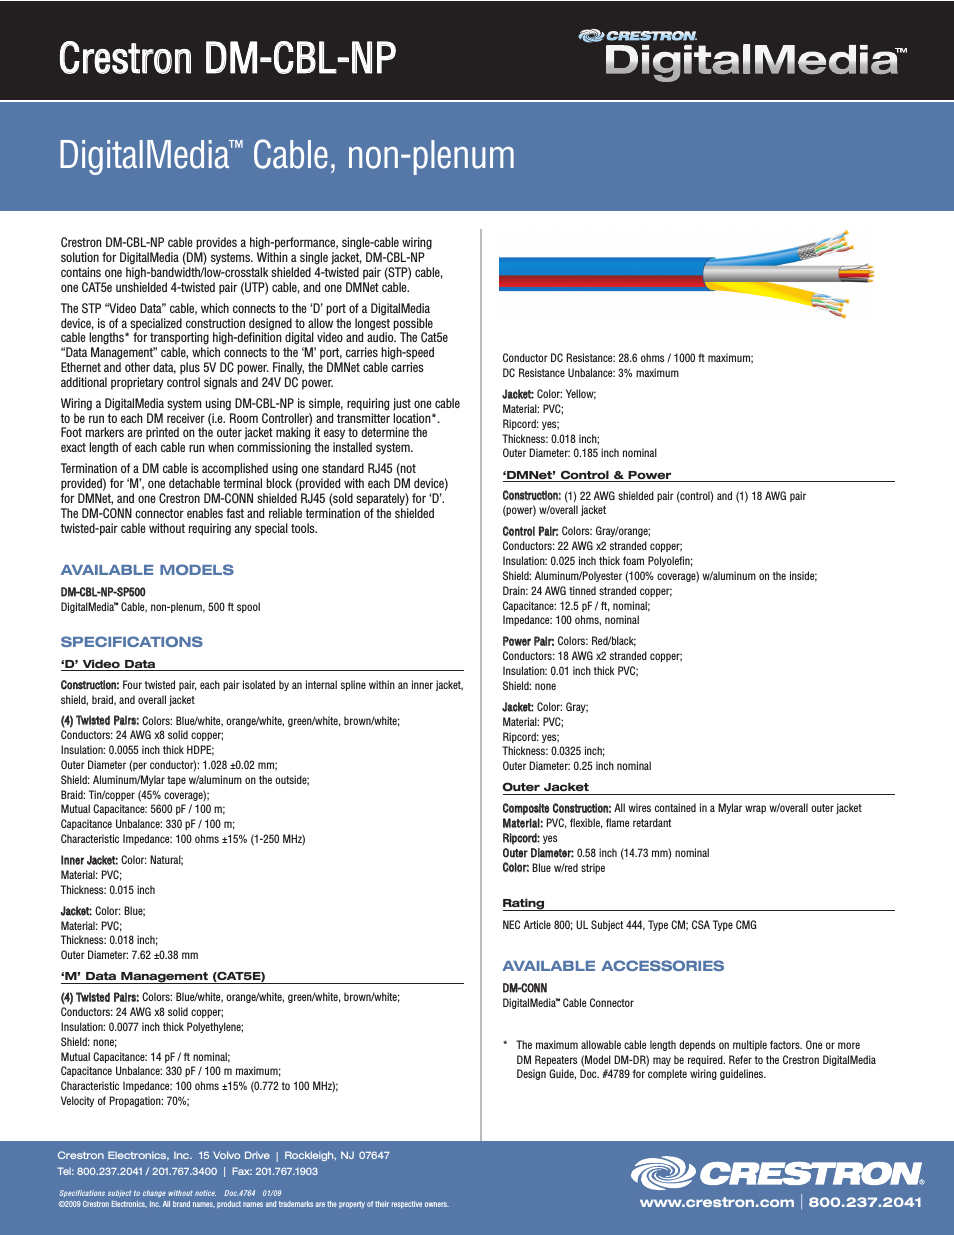 Digital Media DM-CBL-NP